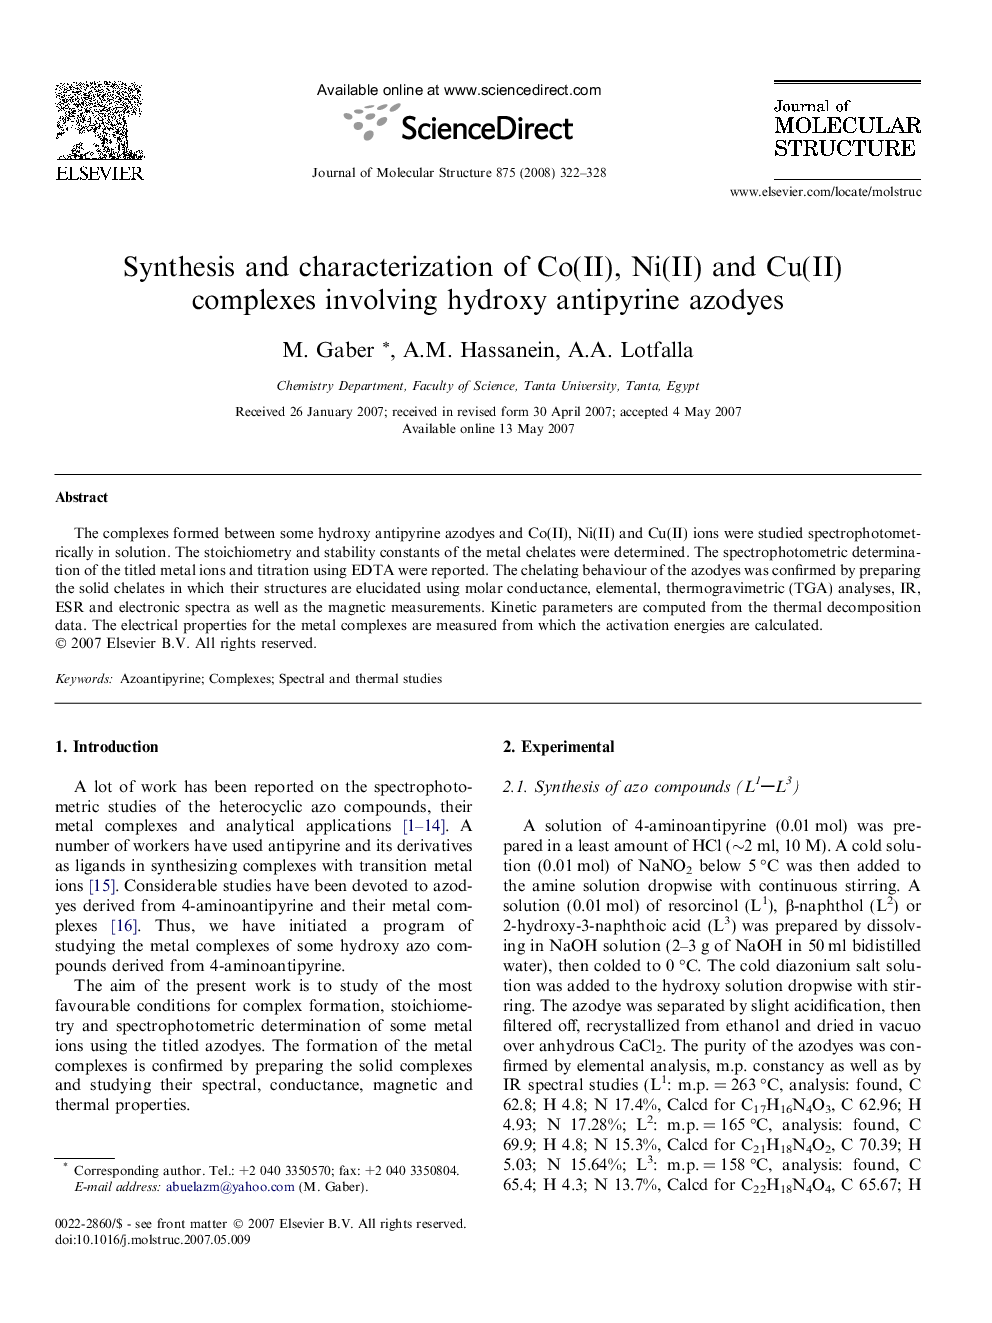 Synthesis and characterization of Co(II), Ni(II) and Cu(II) complexes involving hydroxy antipyrine azodyes